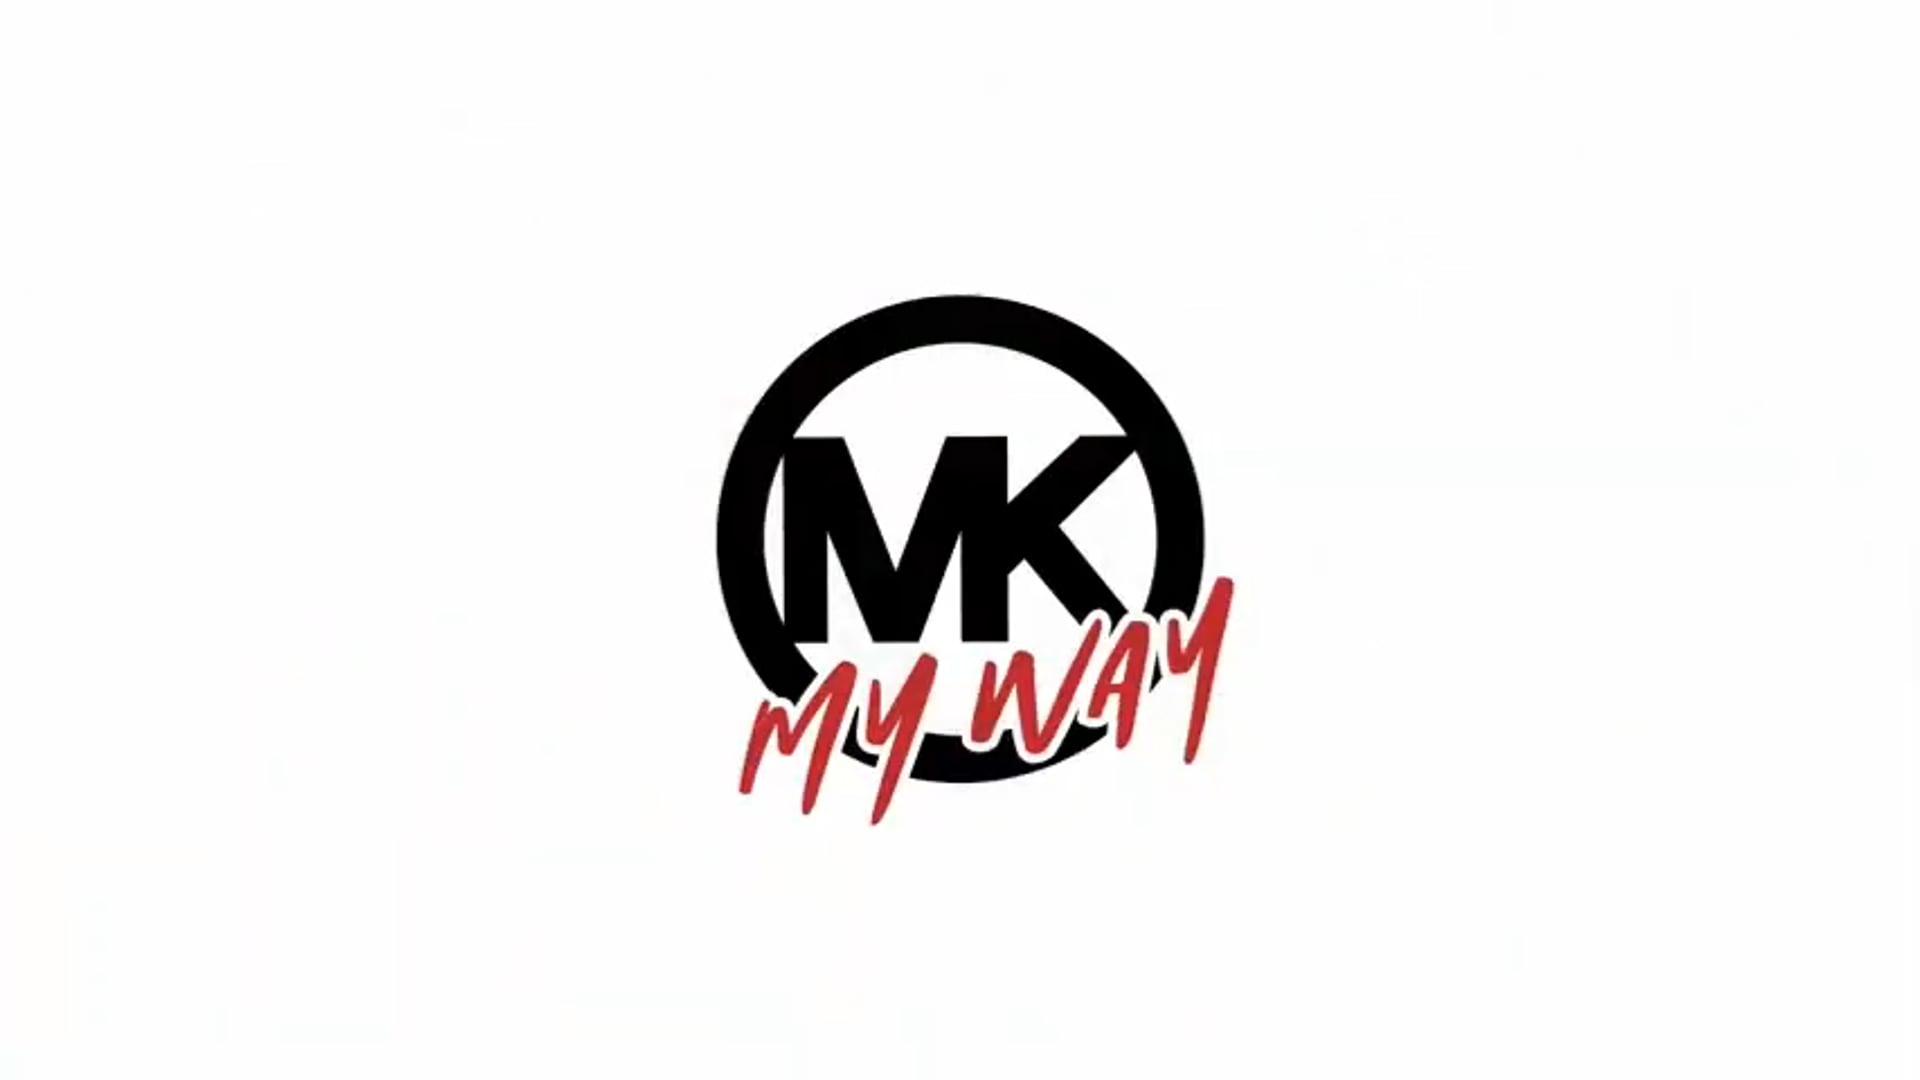 Michael Kors_MK my way